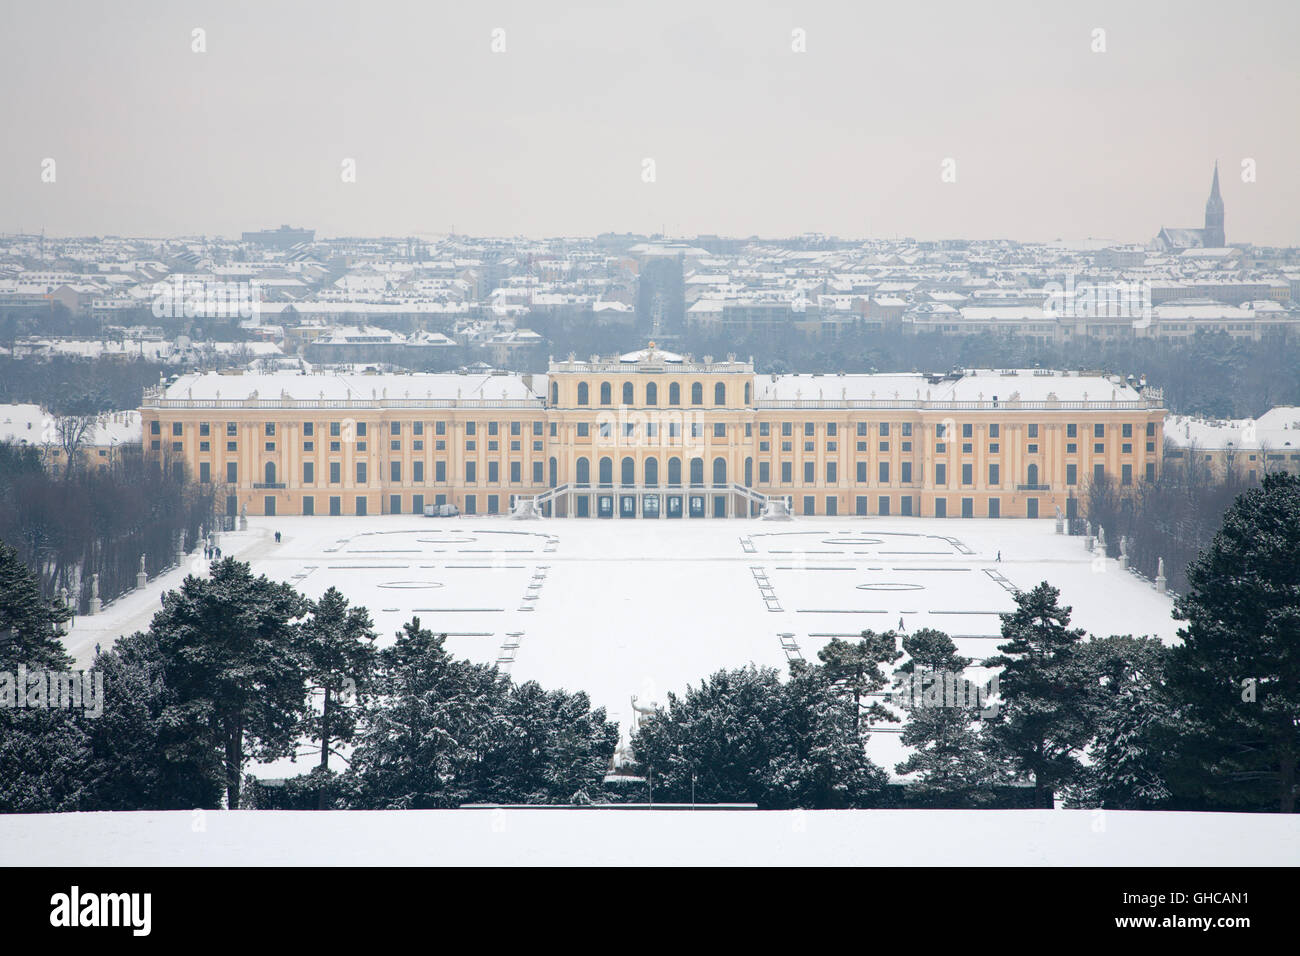 VIENNA,AUSTRIA - JANUARY 15, 2013: The Schonbrunn palace in winter. Stock Photo